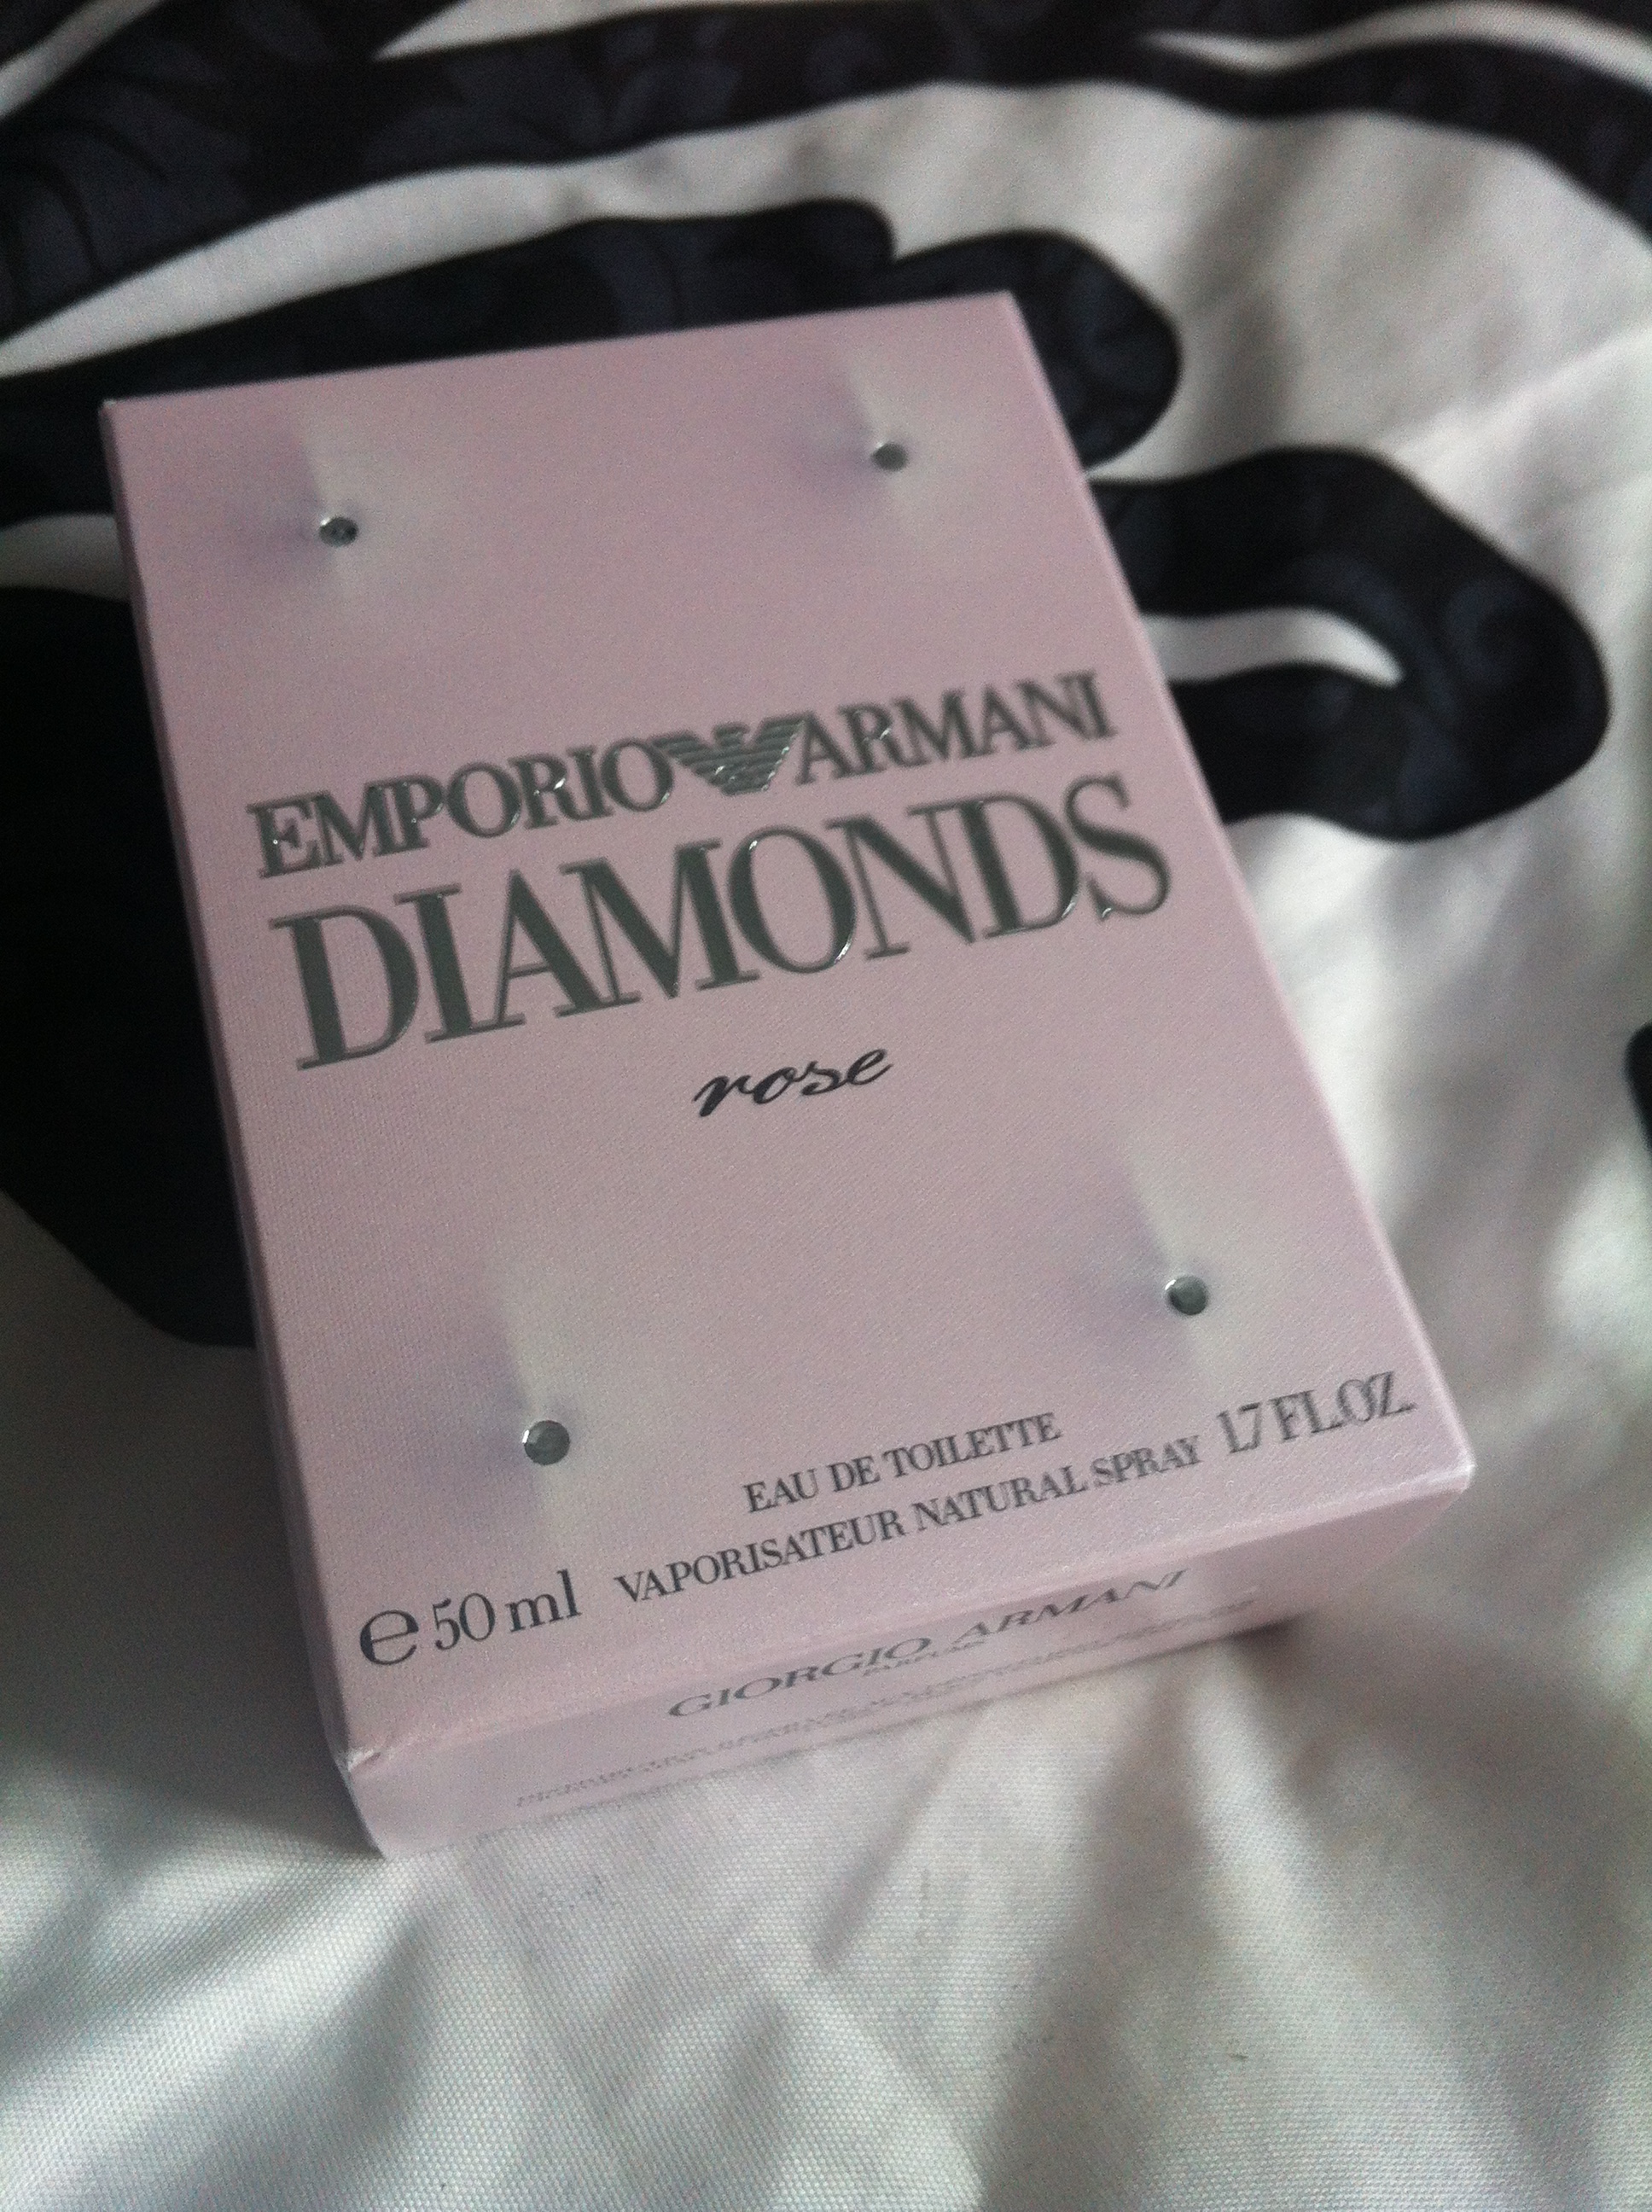 emporio armani diamonds rose 30ml